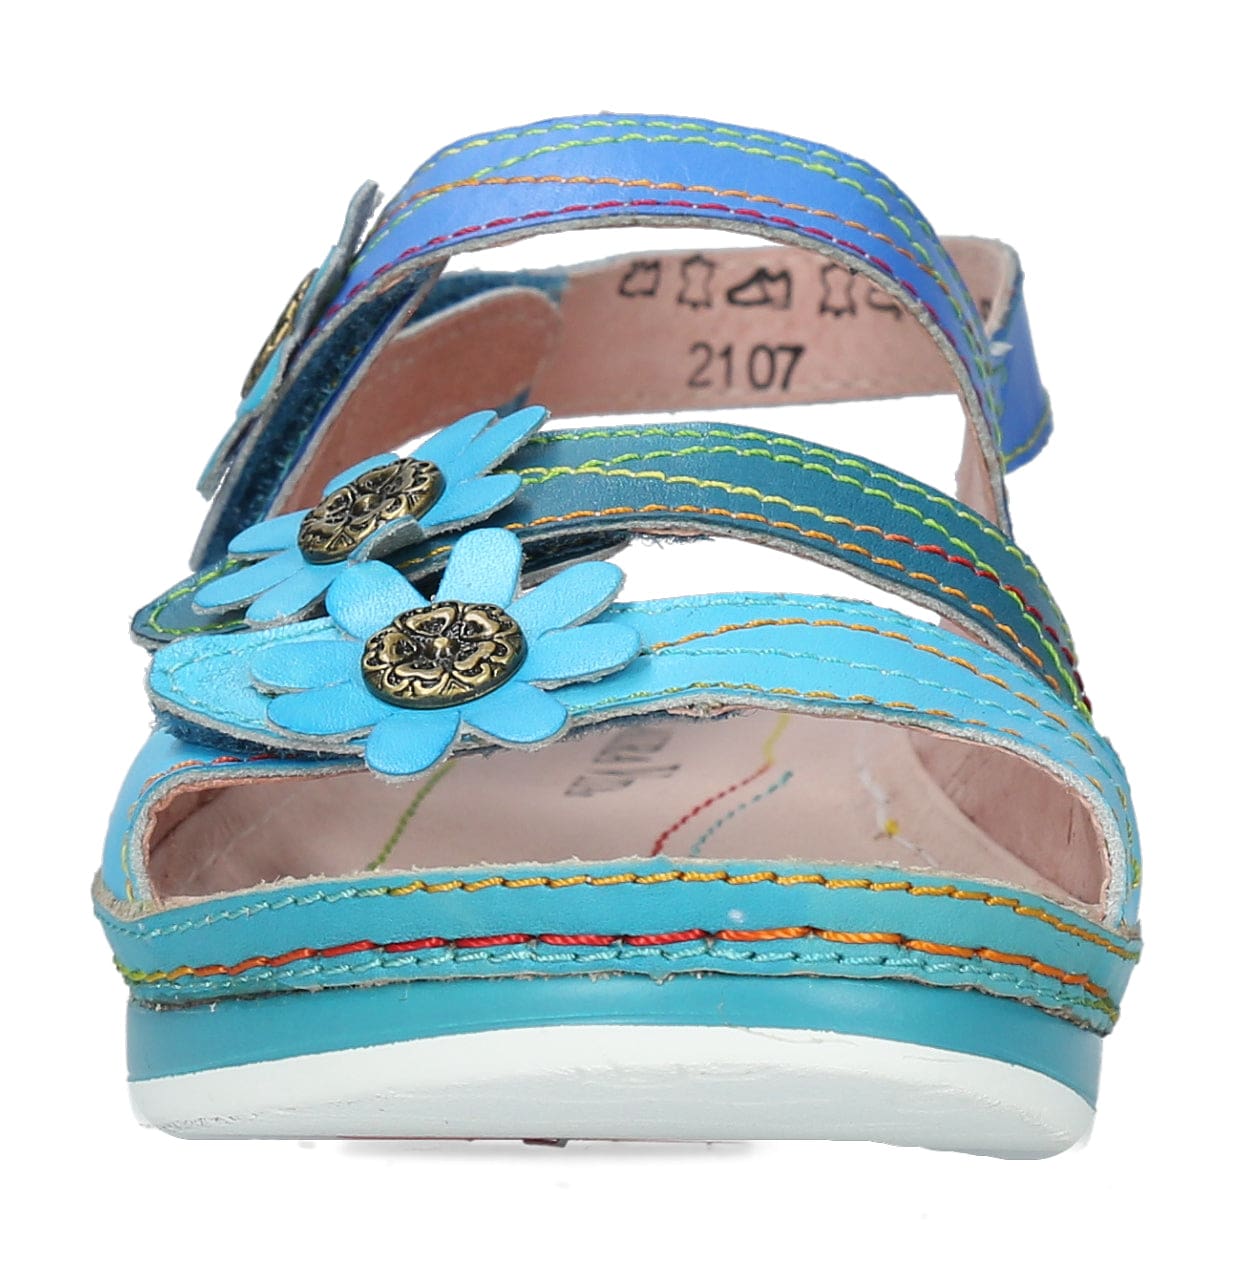 Schuhe BRCUELO 201 - Sandale